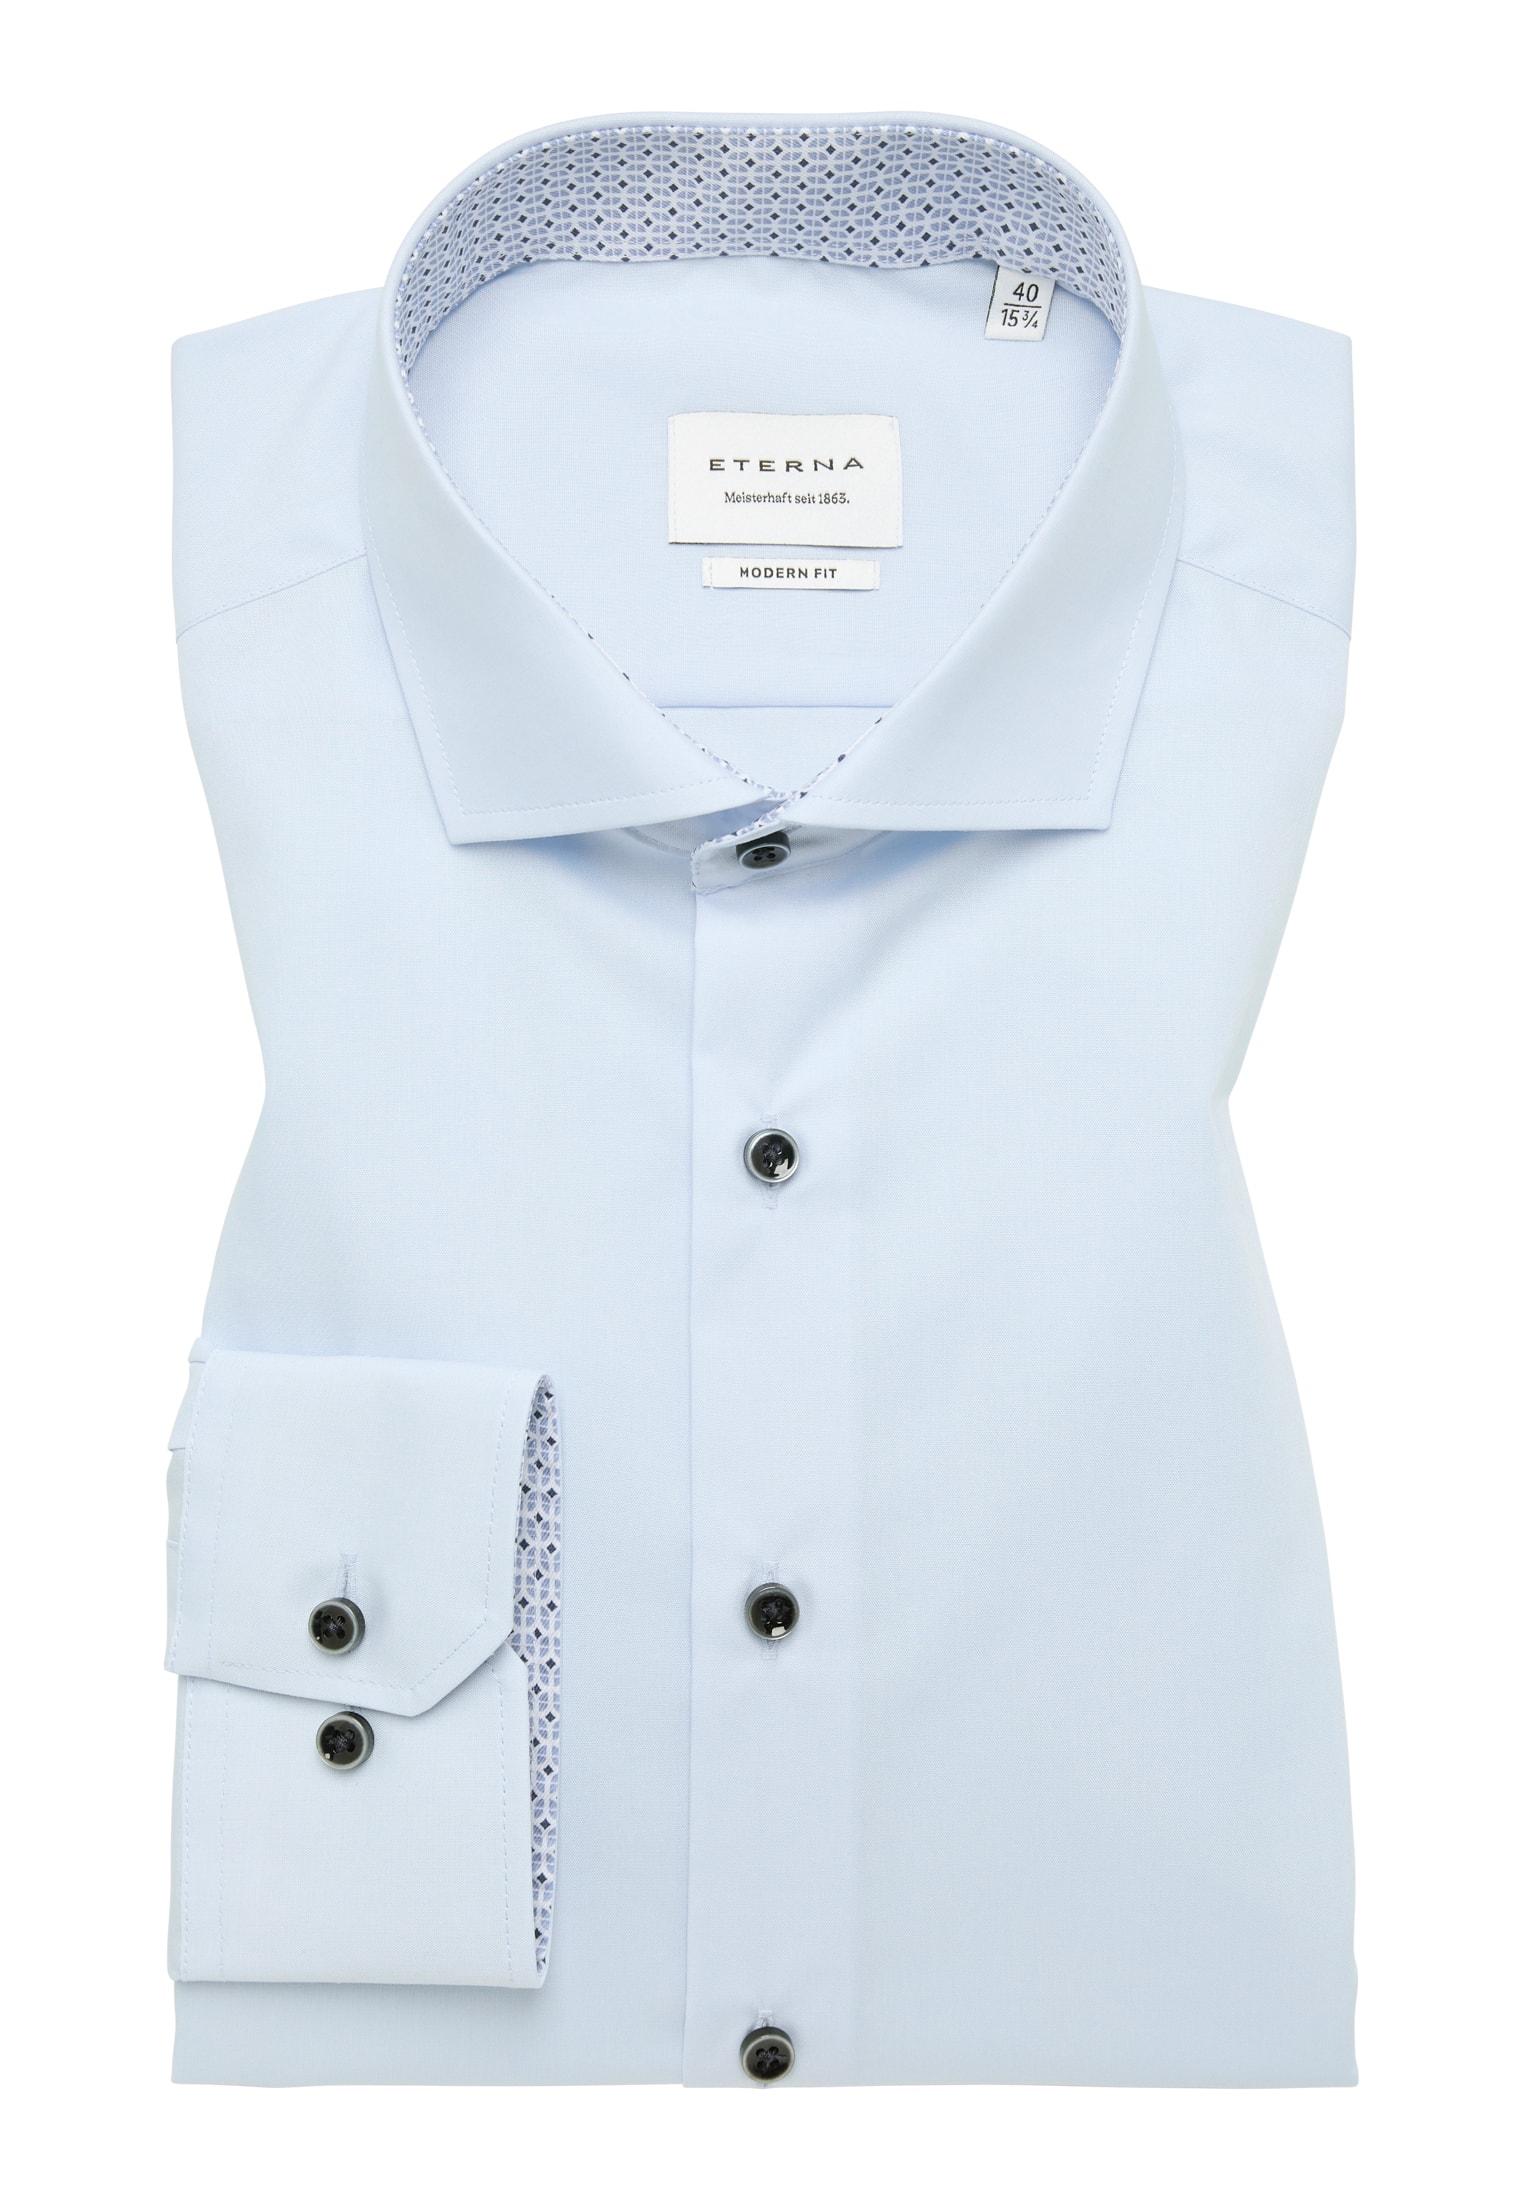 MODERN FIT Original Shirt in himmelblau unifarben | himmelblau | 44 |  Langarm | 1SH12860-01-12-44-1/1